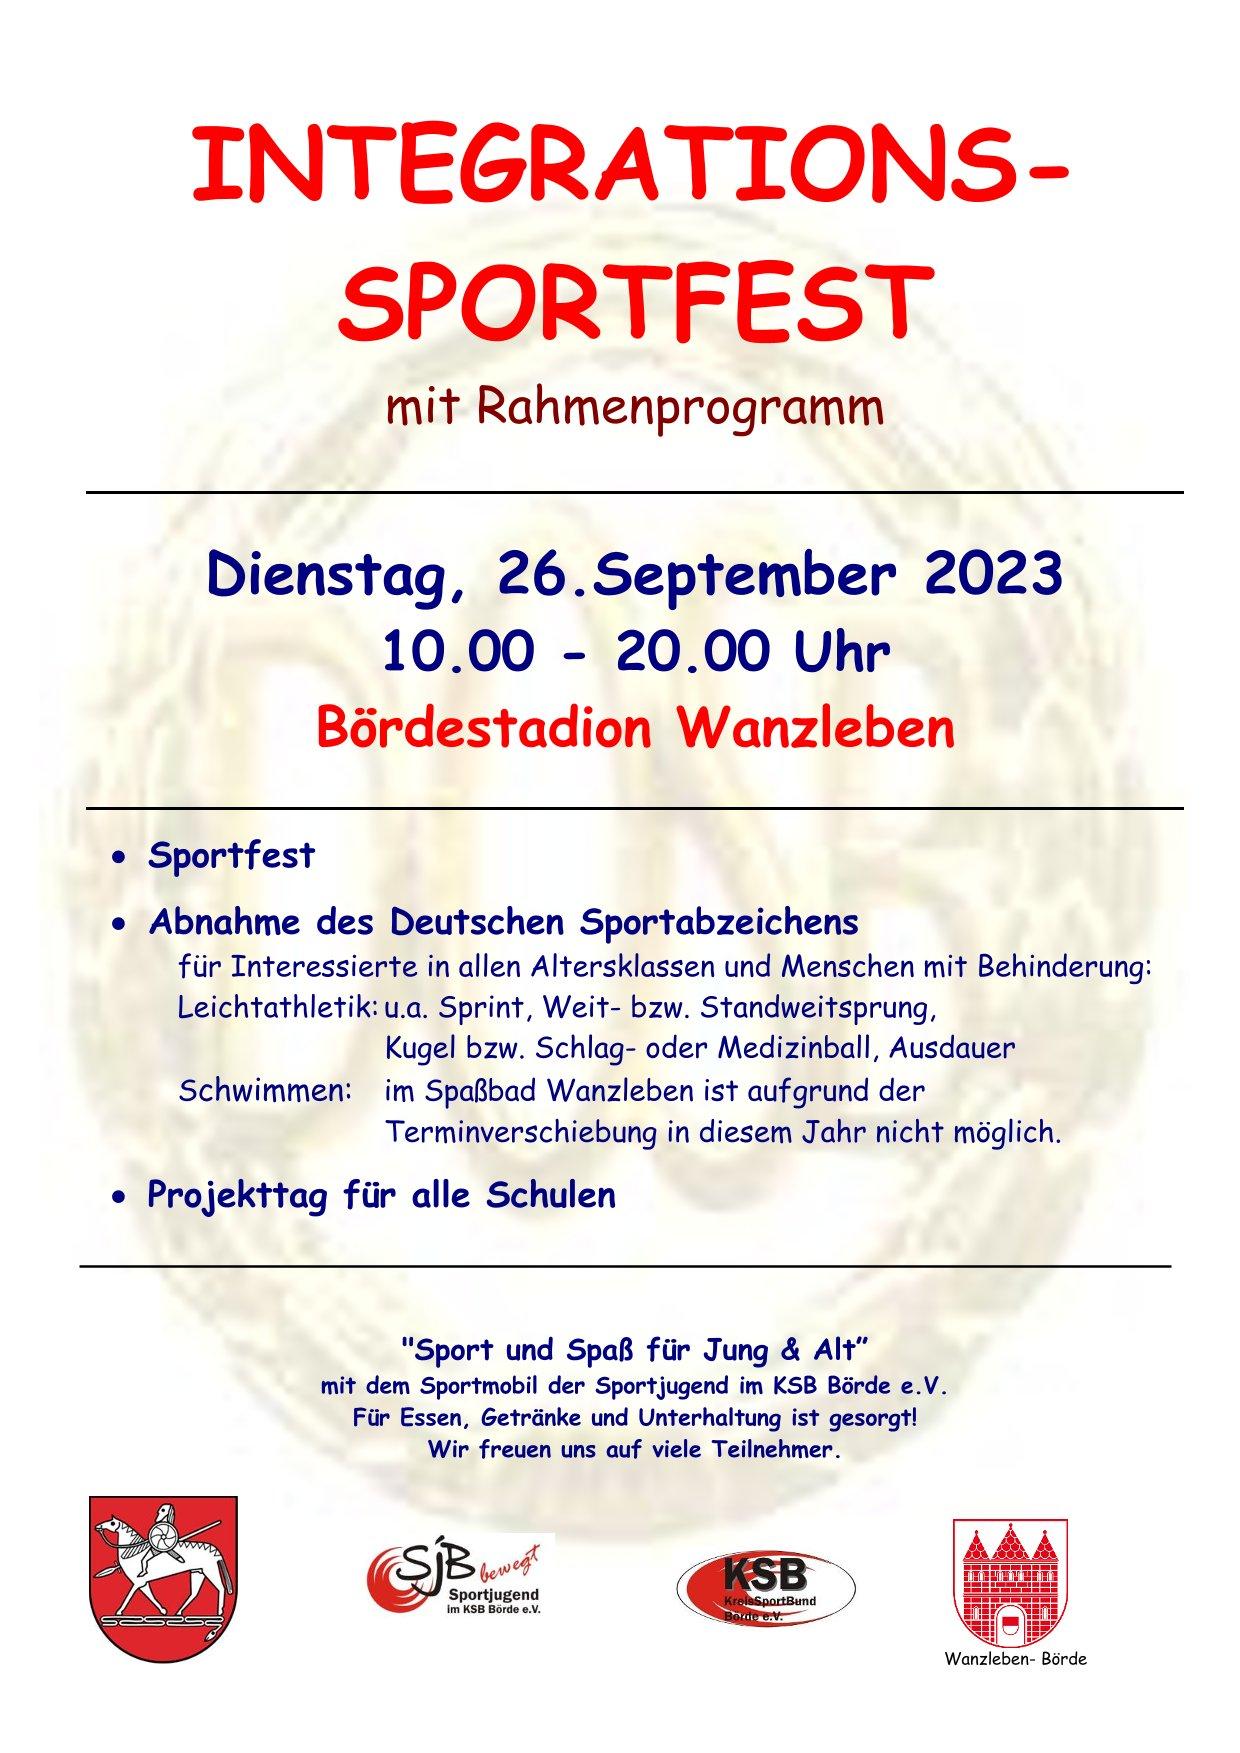 INTEGRATIONS-Sportfest Poster 2023-1